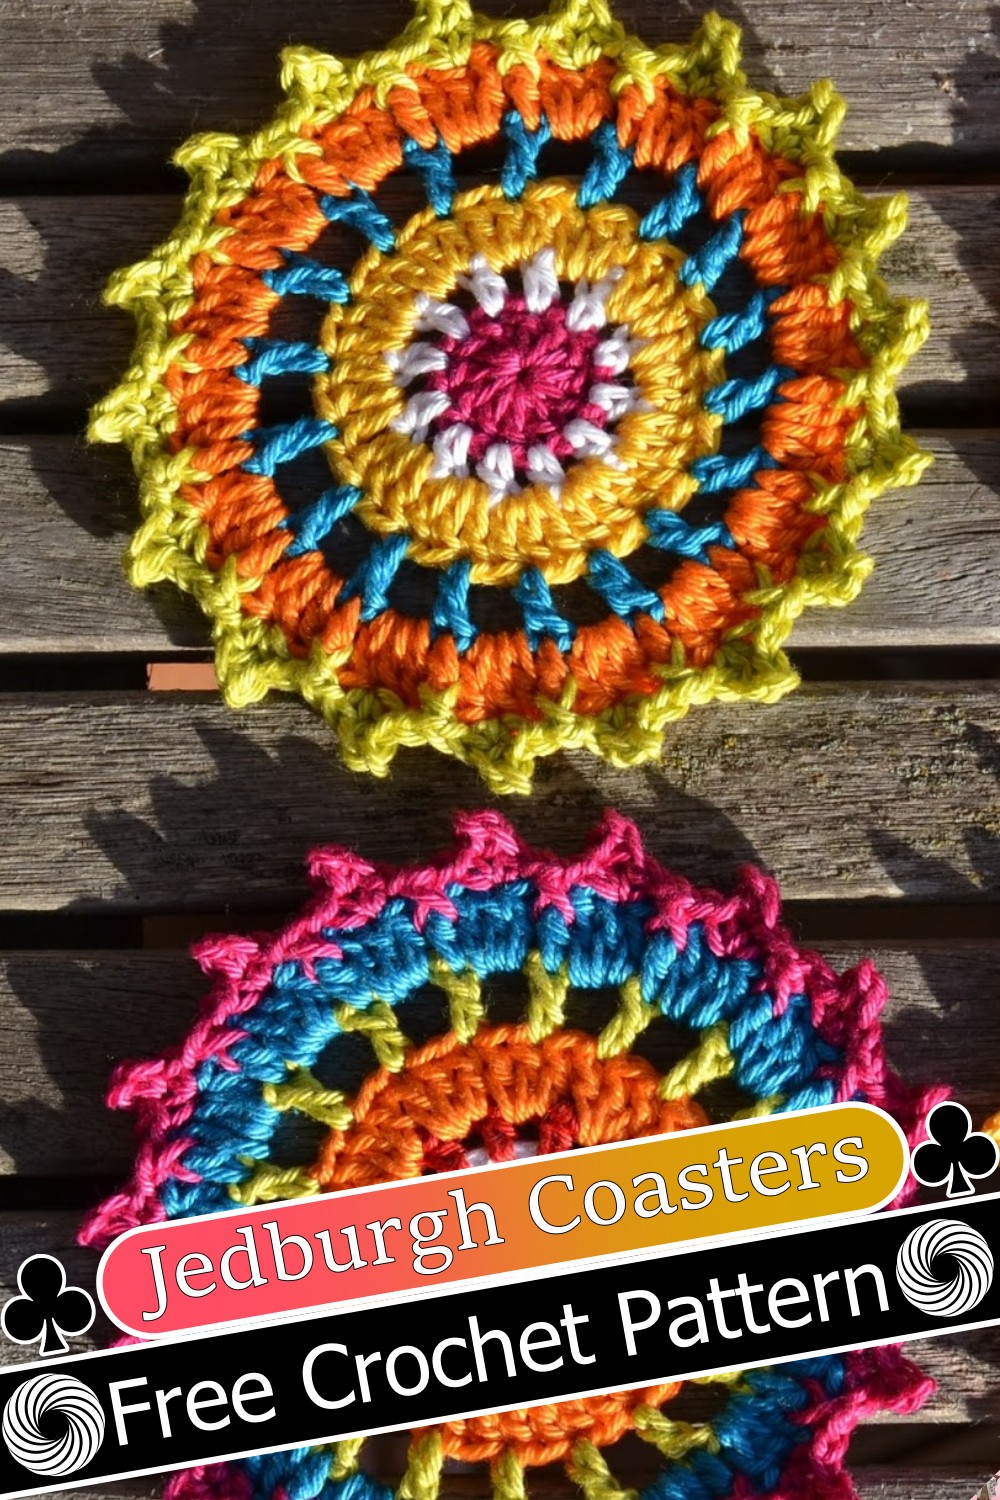 Jedburgh Crochet Coasters